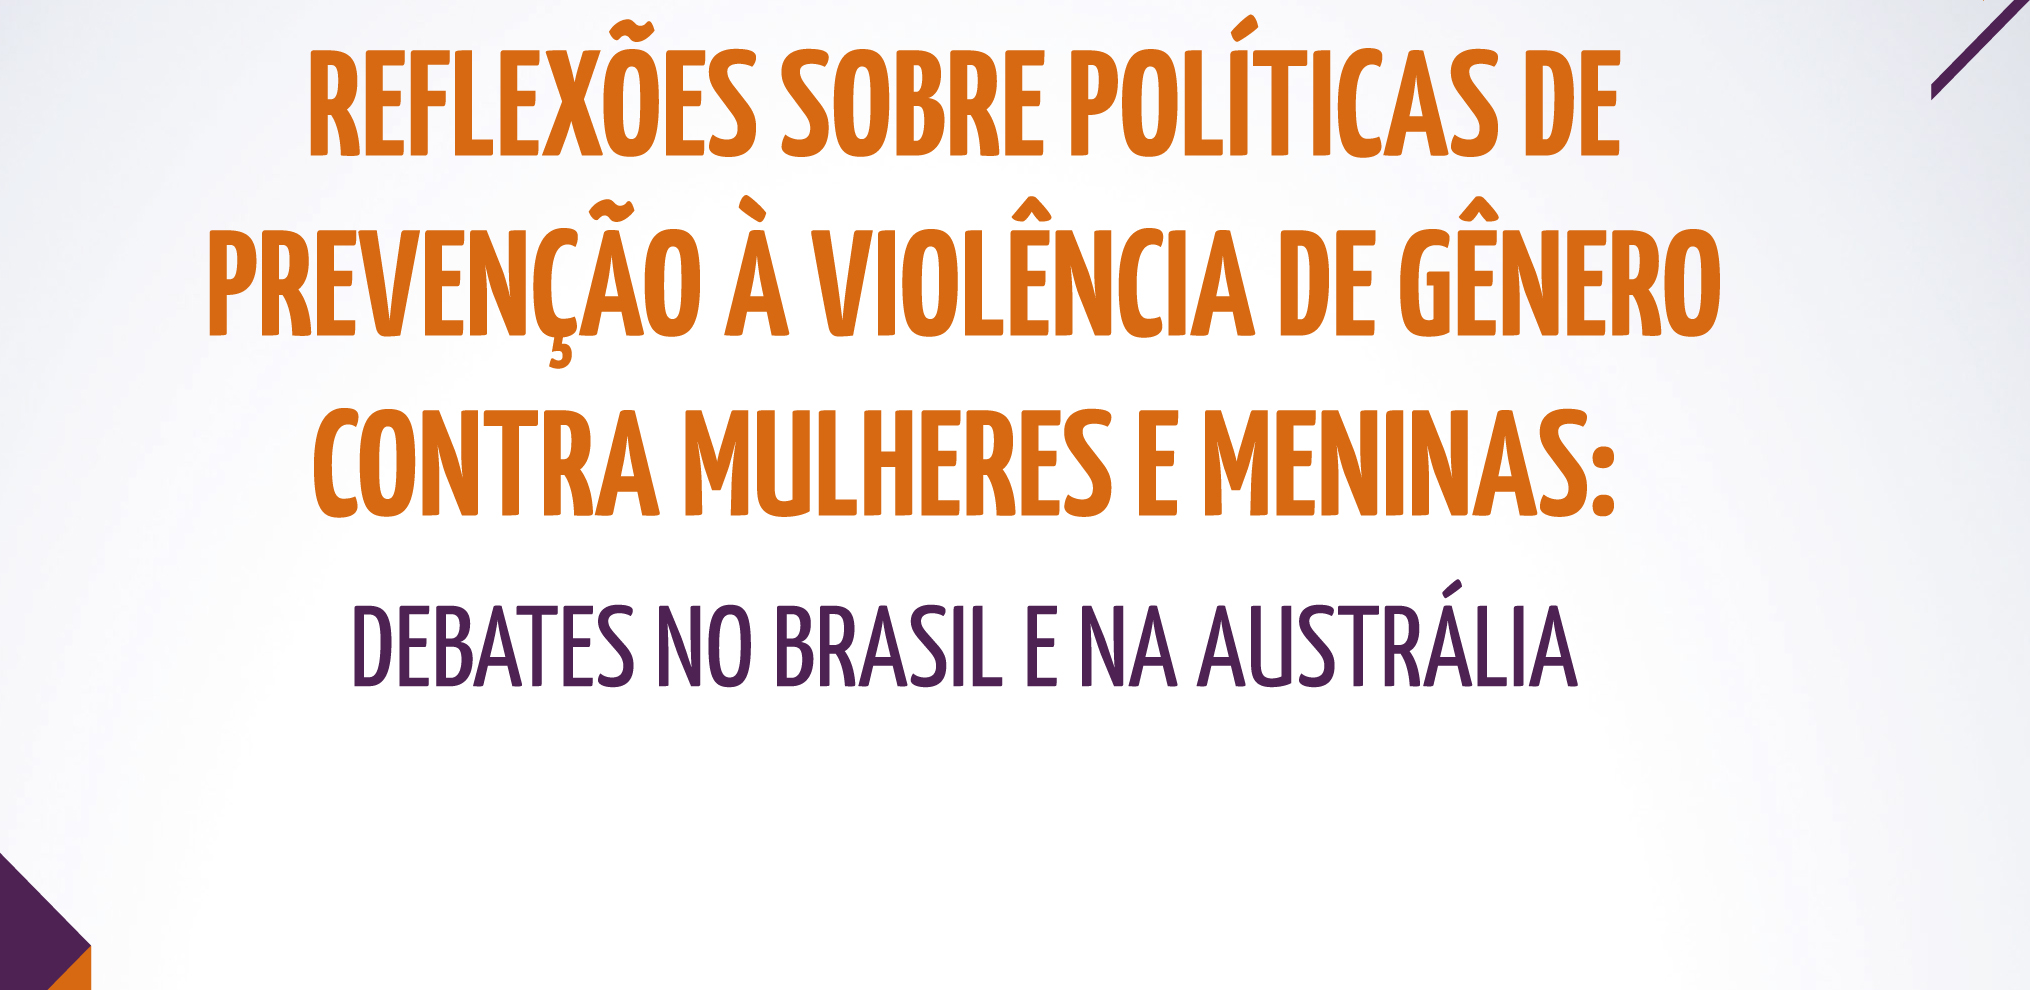 BRASILAUSTRALIA_ReflexoessobrePoliticasdePrevencaoaViolenciadeGenero2020capa